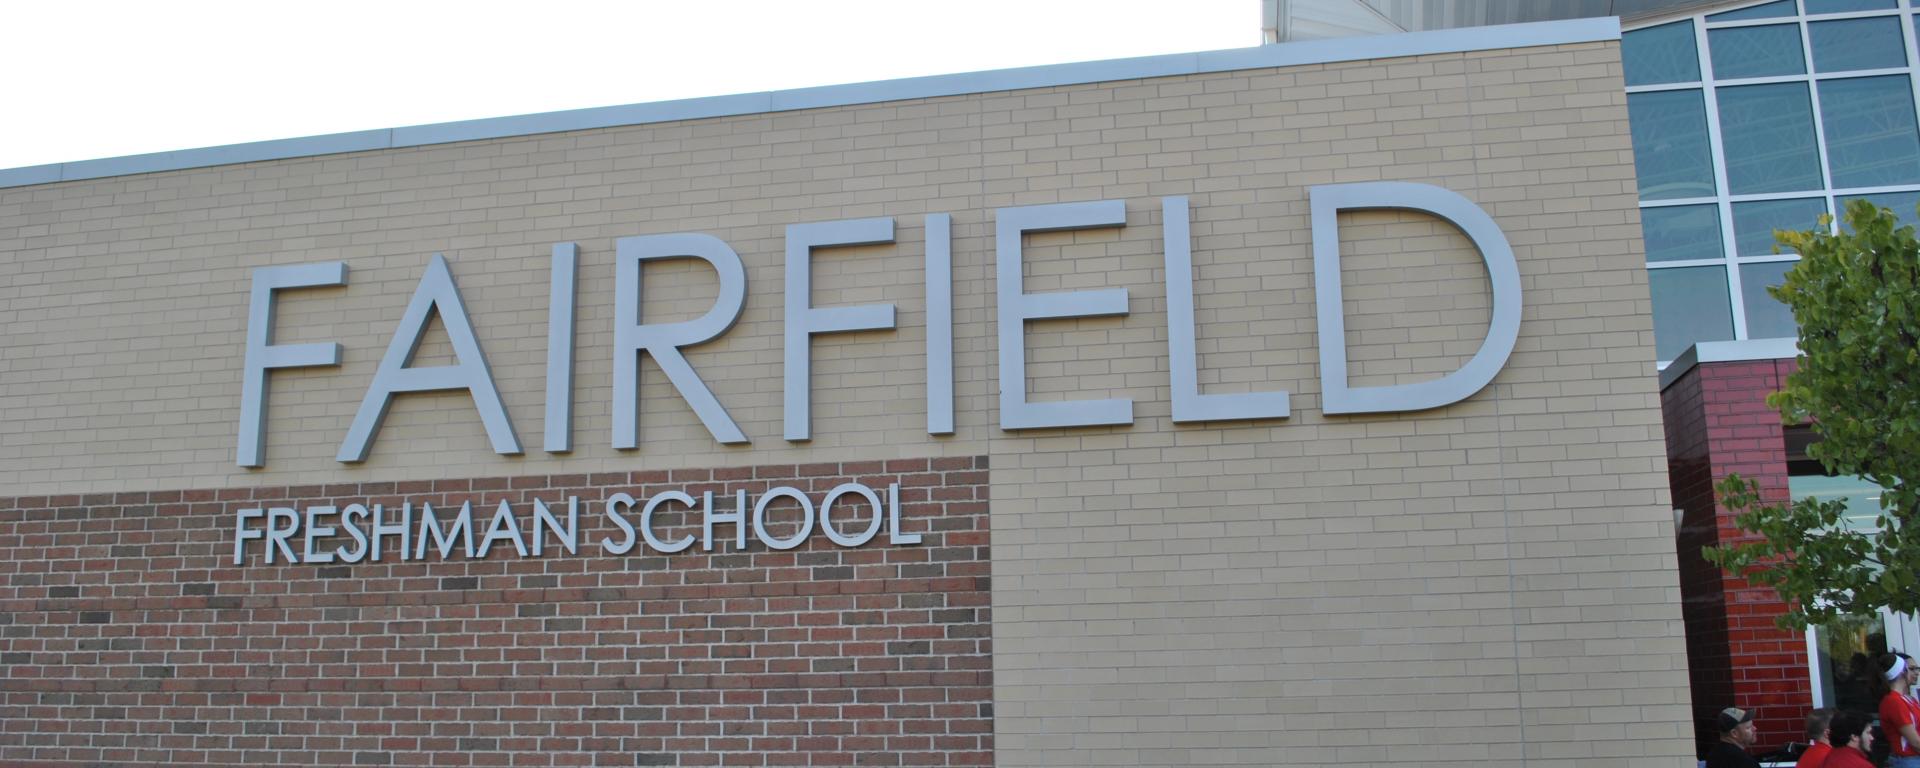 Fairfield Freshman School